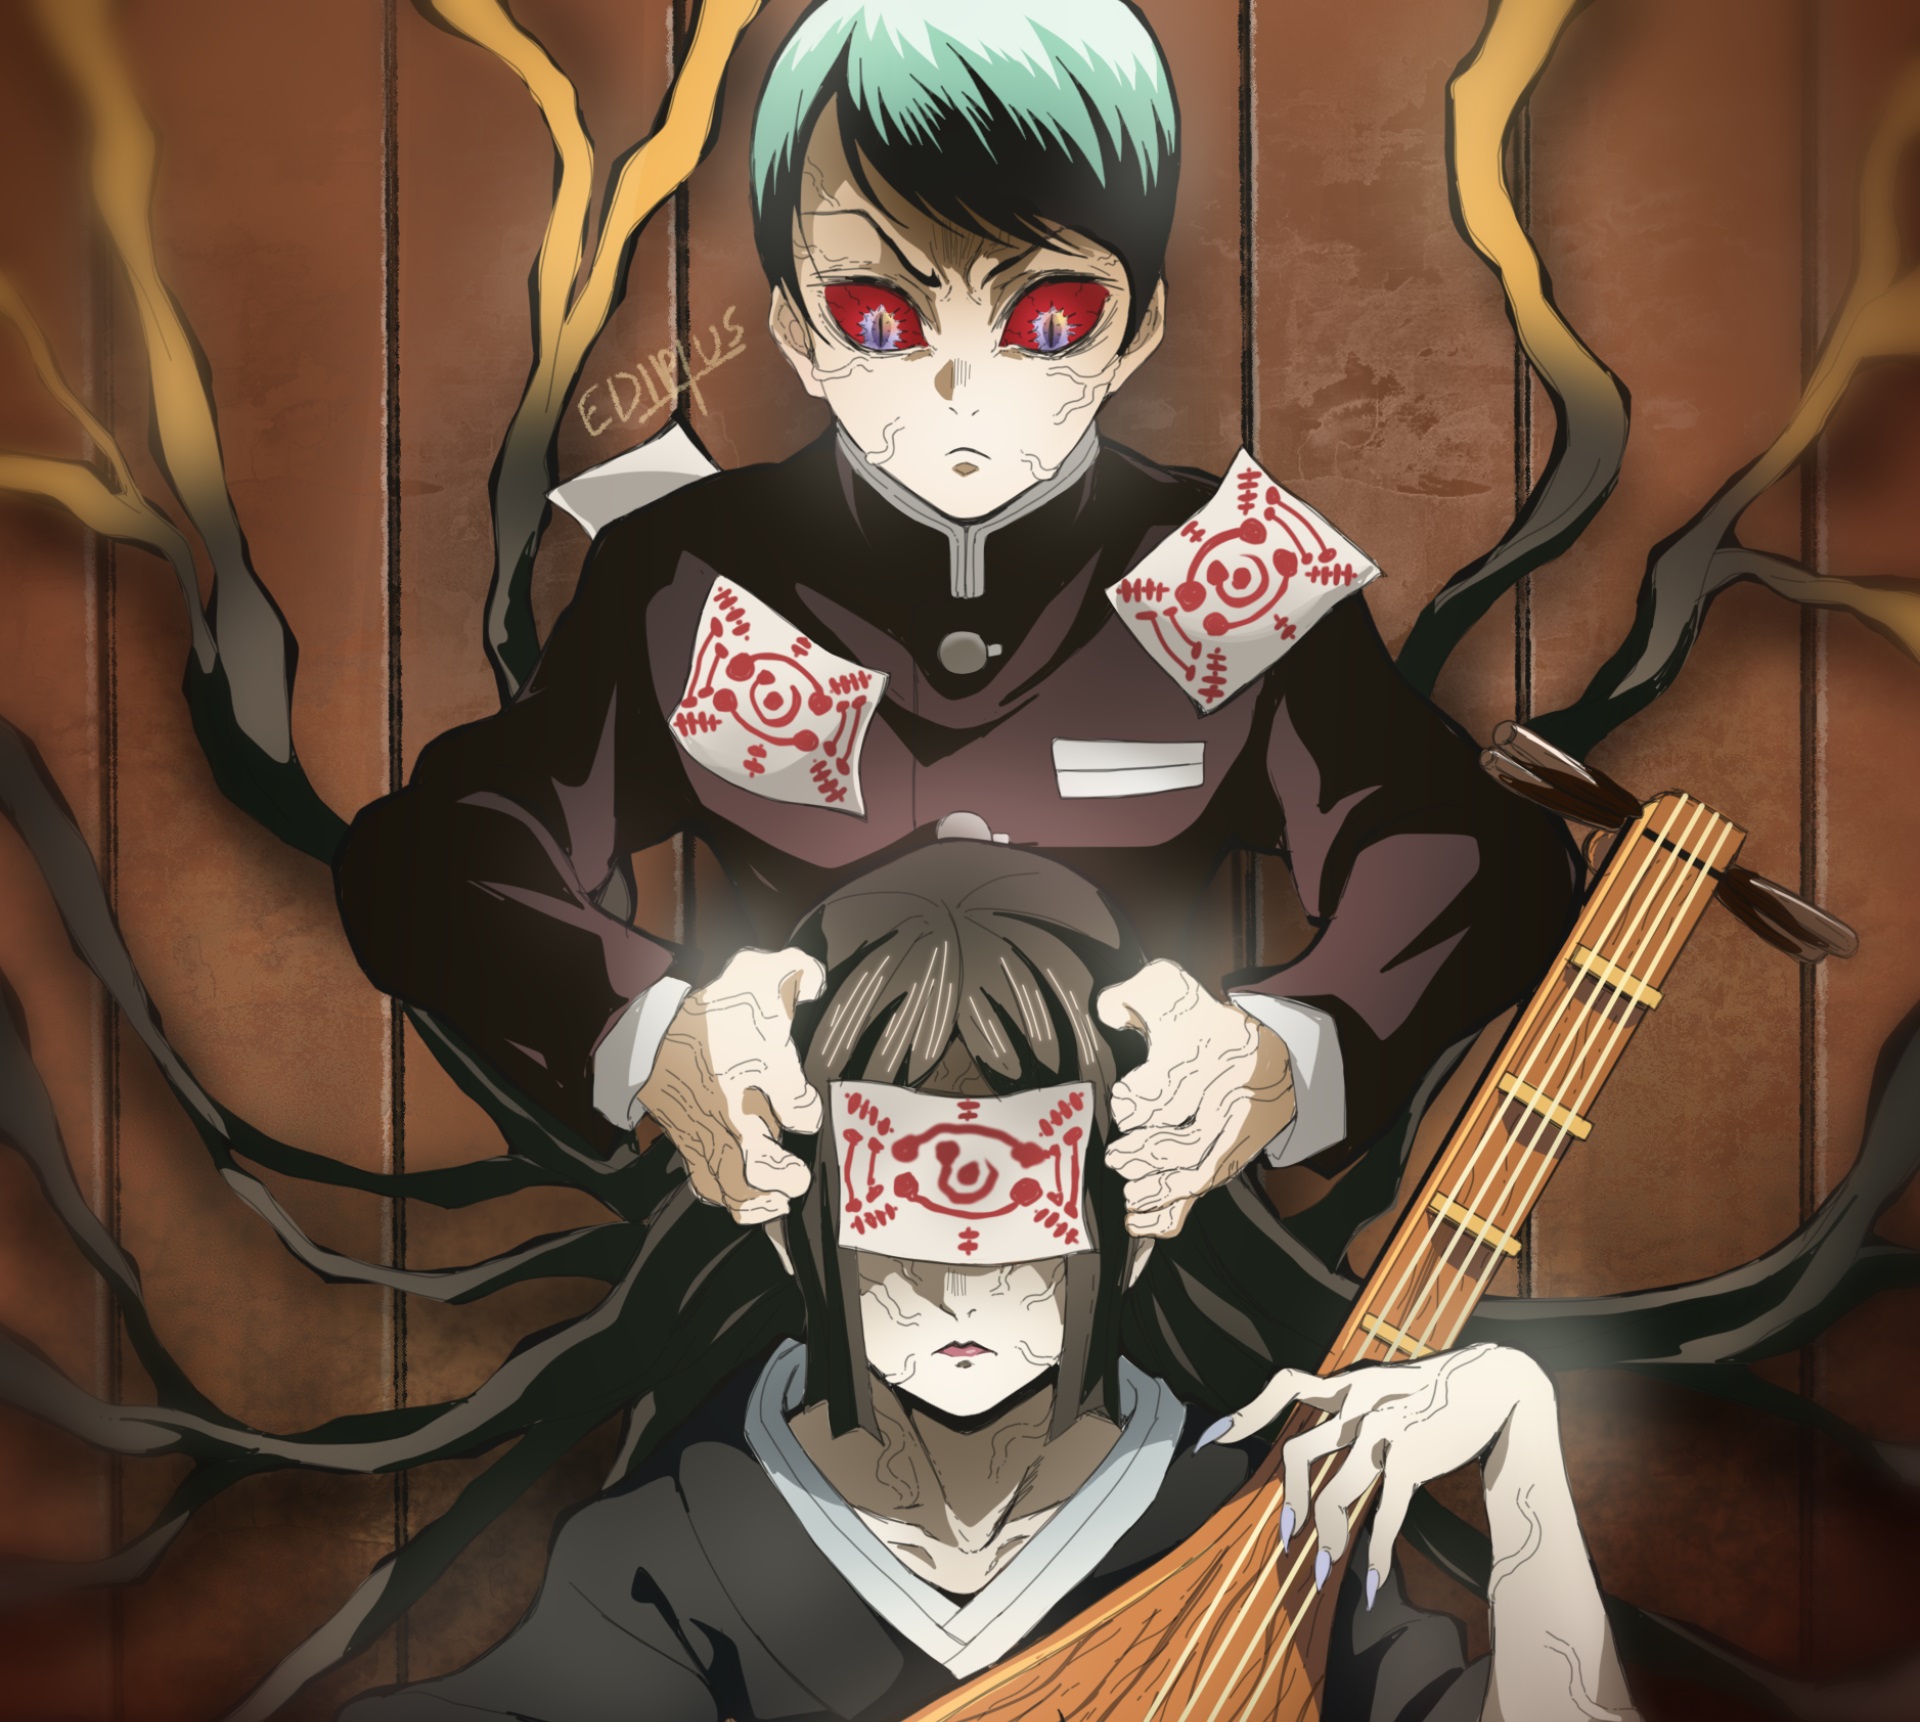 Kokushibo (Demon Slayer) wallpapers for desktop, download free Kokushibo  (Demon Slayer) pictures and backgrounds for PC